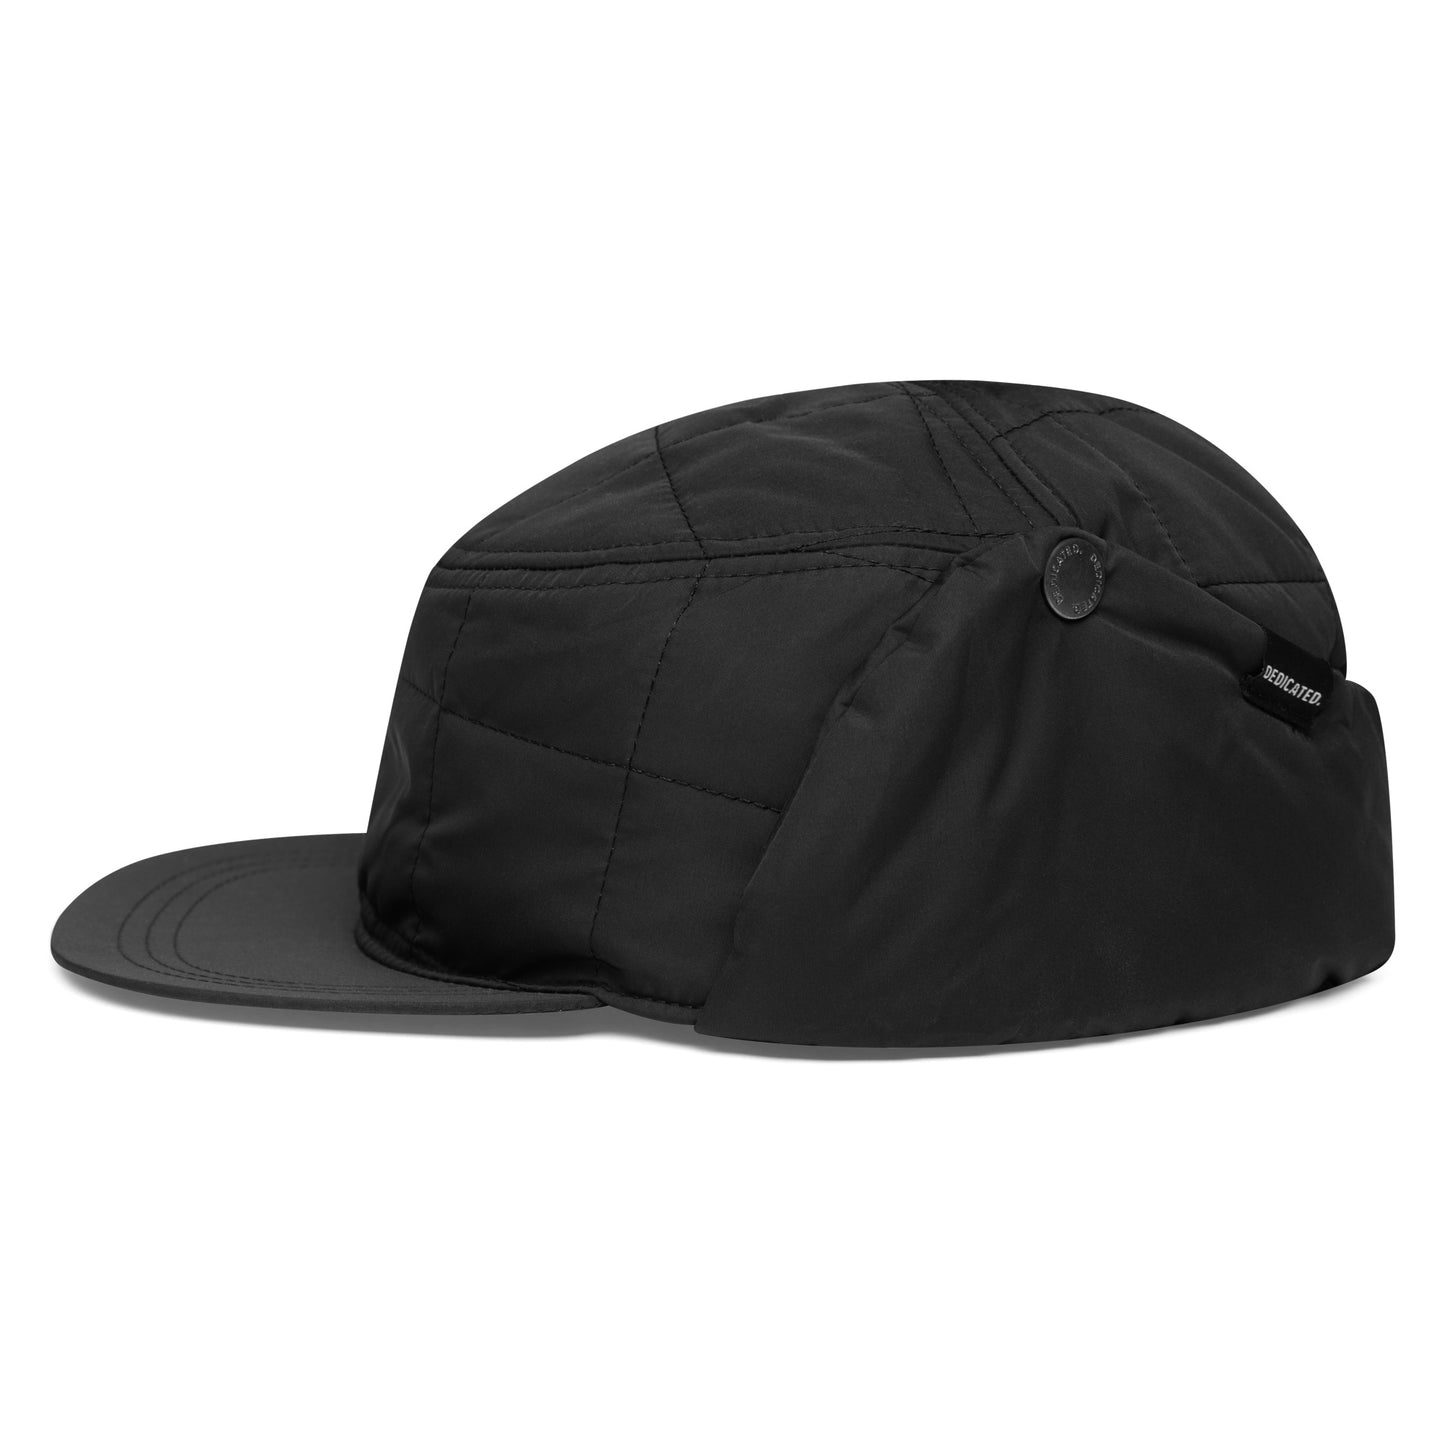 earflap cap jokkmokk, black - dedicated